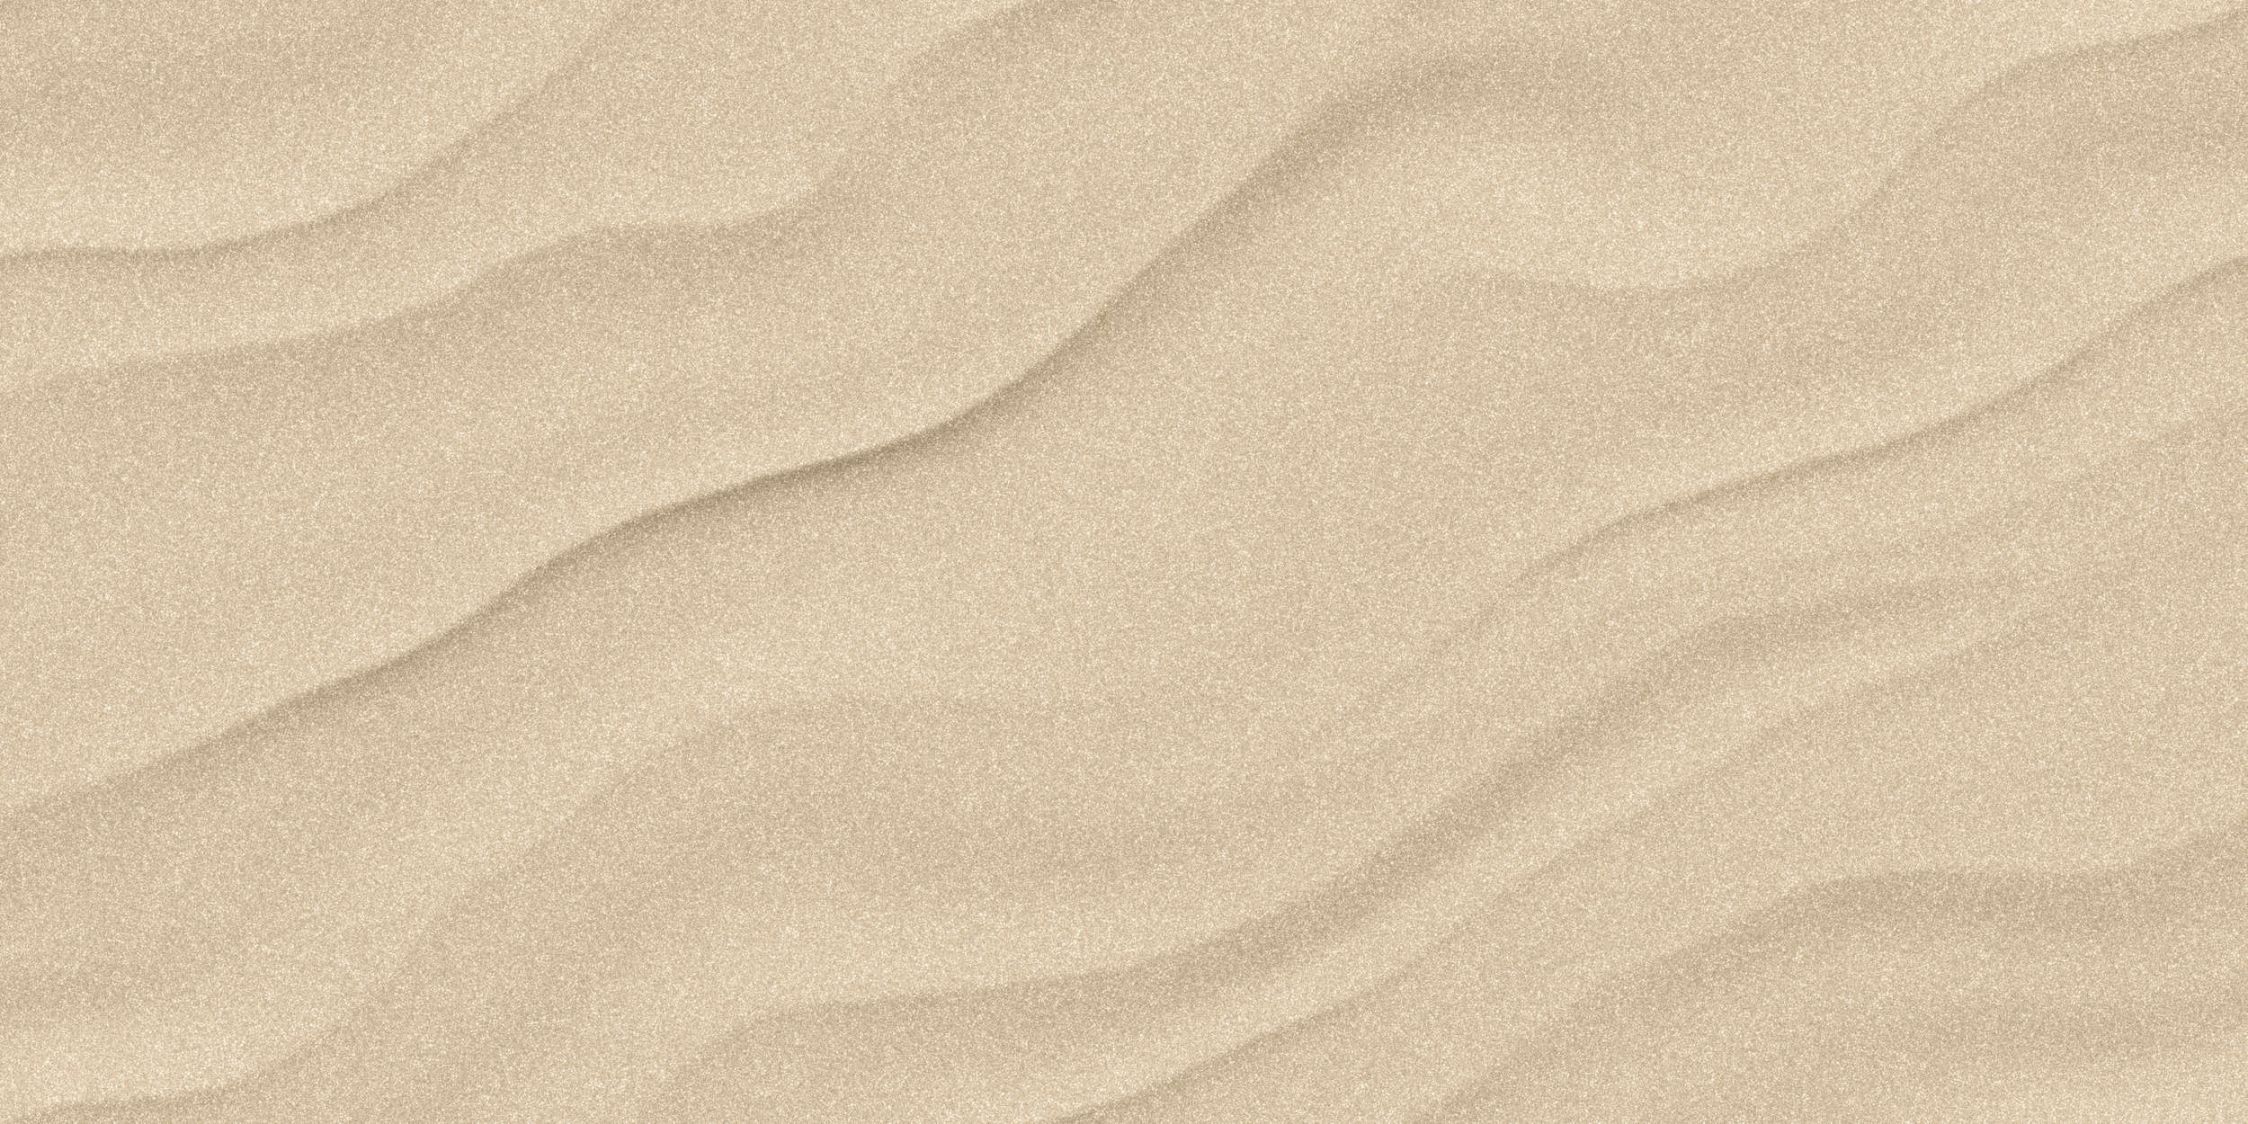             Photo wallpaper »sahara« - Sandy desert floor with handmade paper look - Matt, smooth non-woven fabric
        